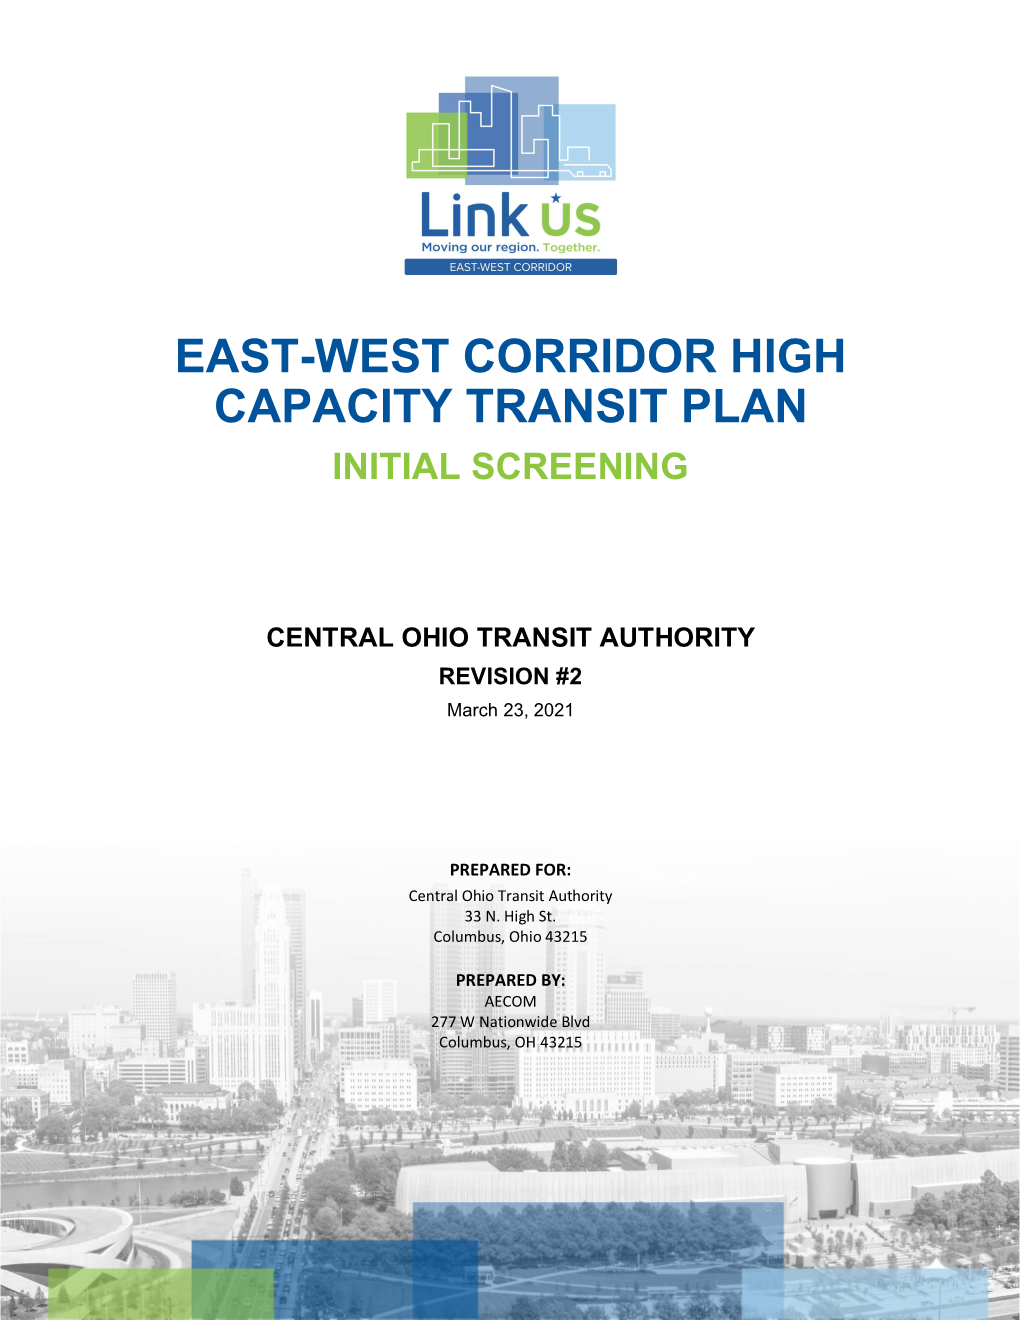 East-West Corridor High Capacity Transit Plan Initial Screening